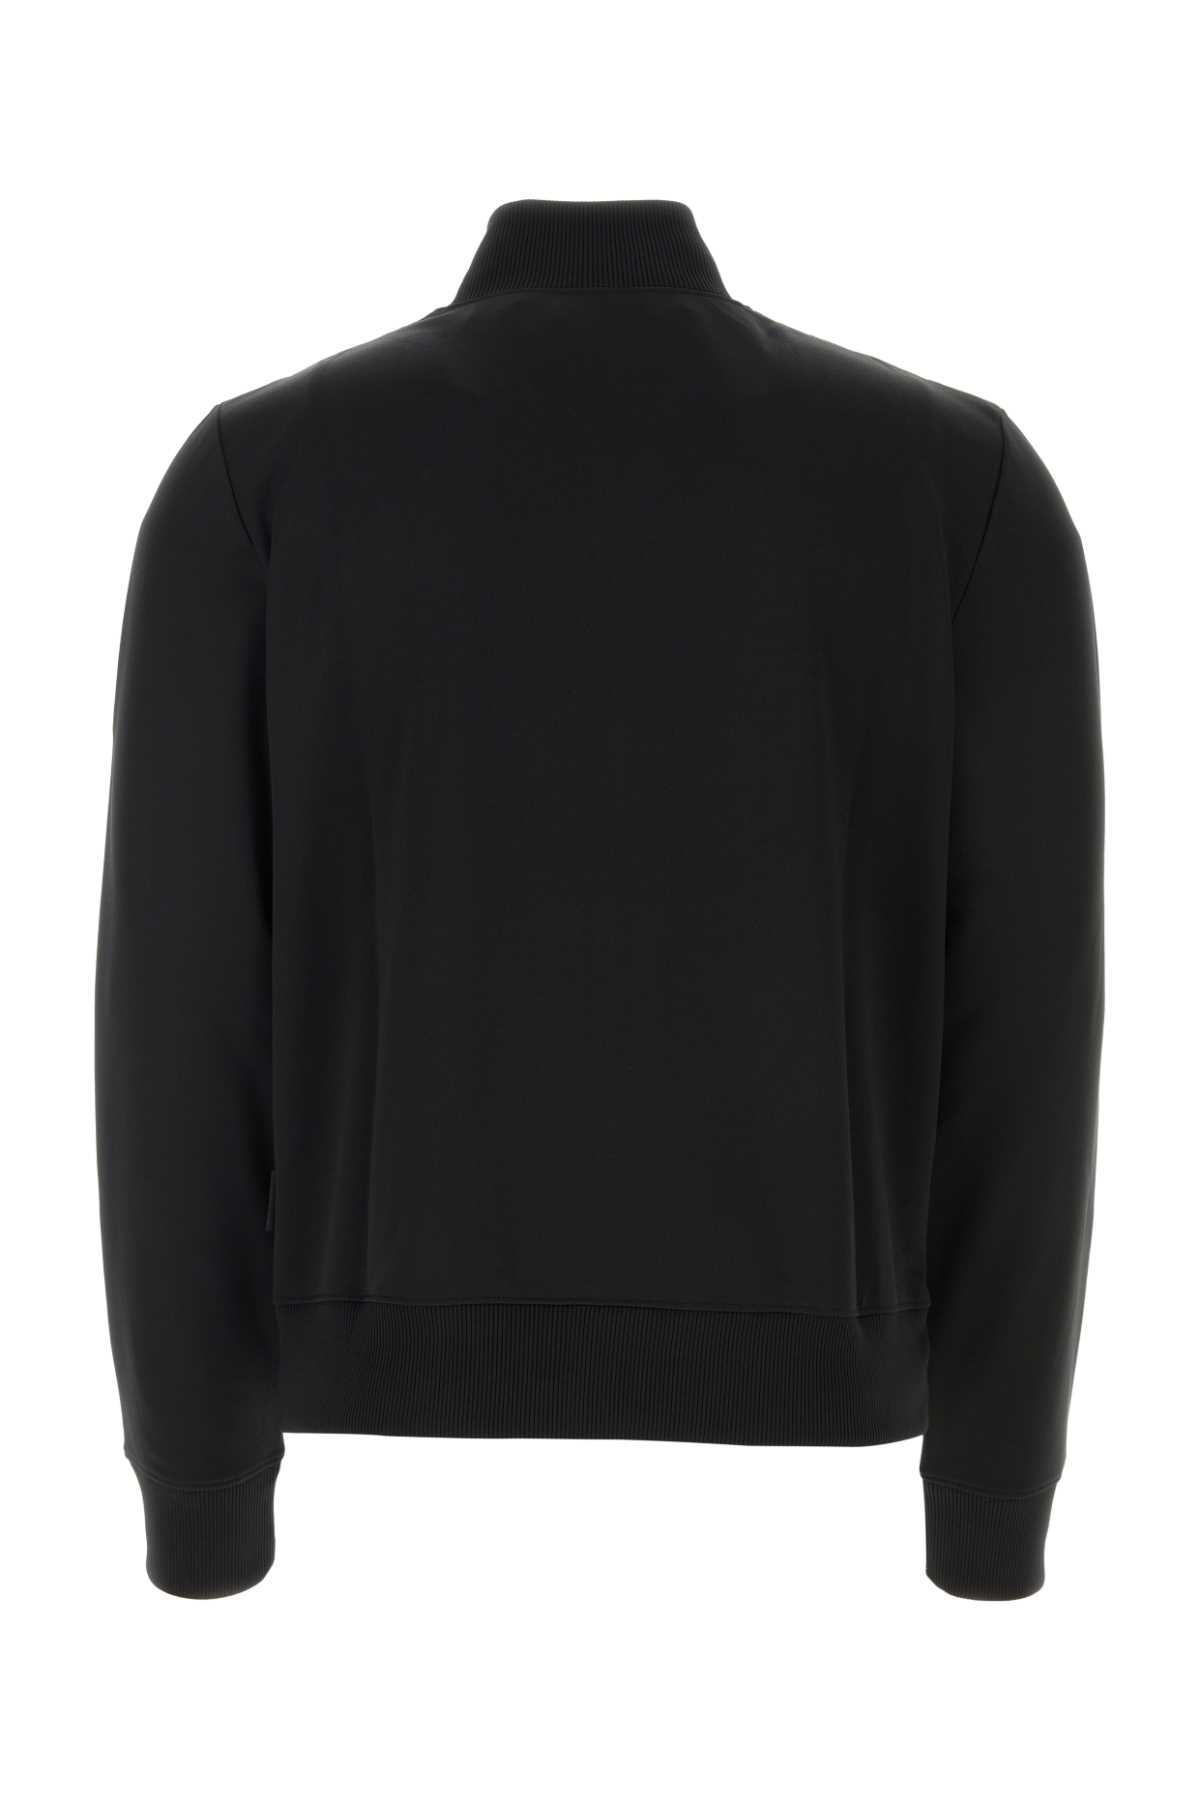 Courrèges Black Polyester Sweatshirt